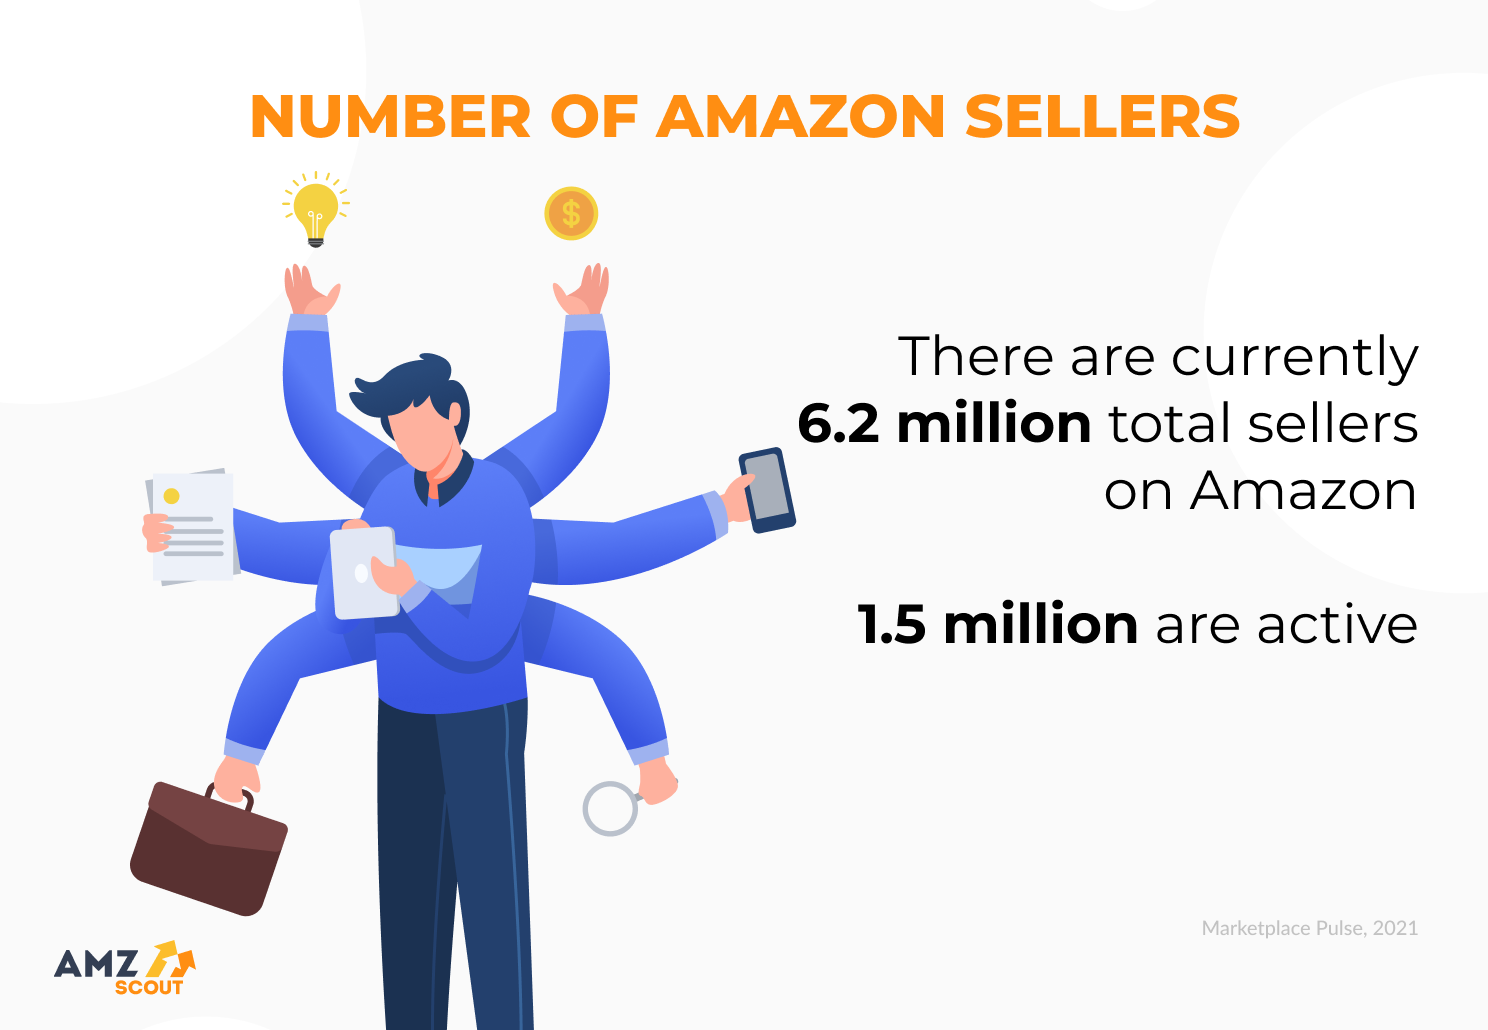 Amazon has over 6 million sellers according to statistics